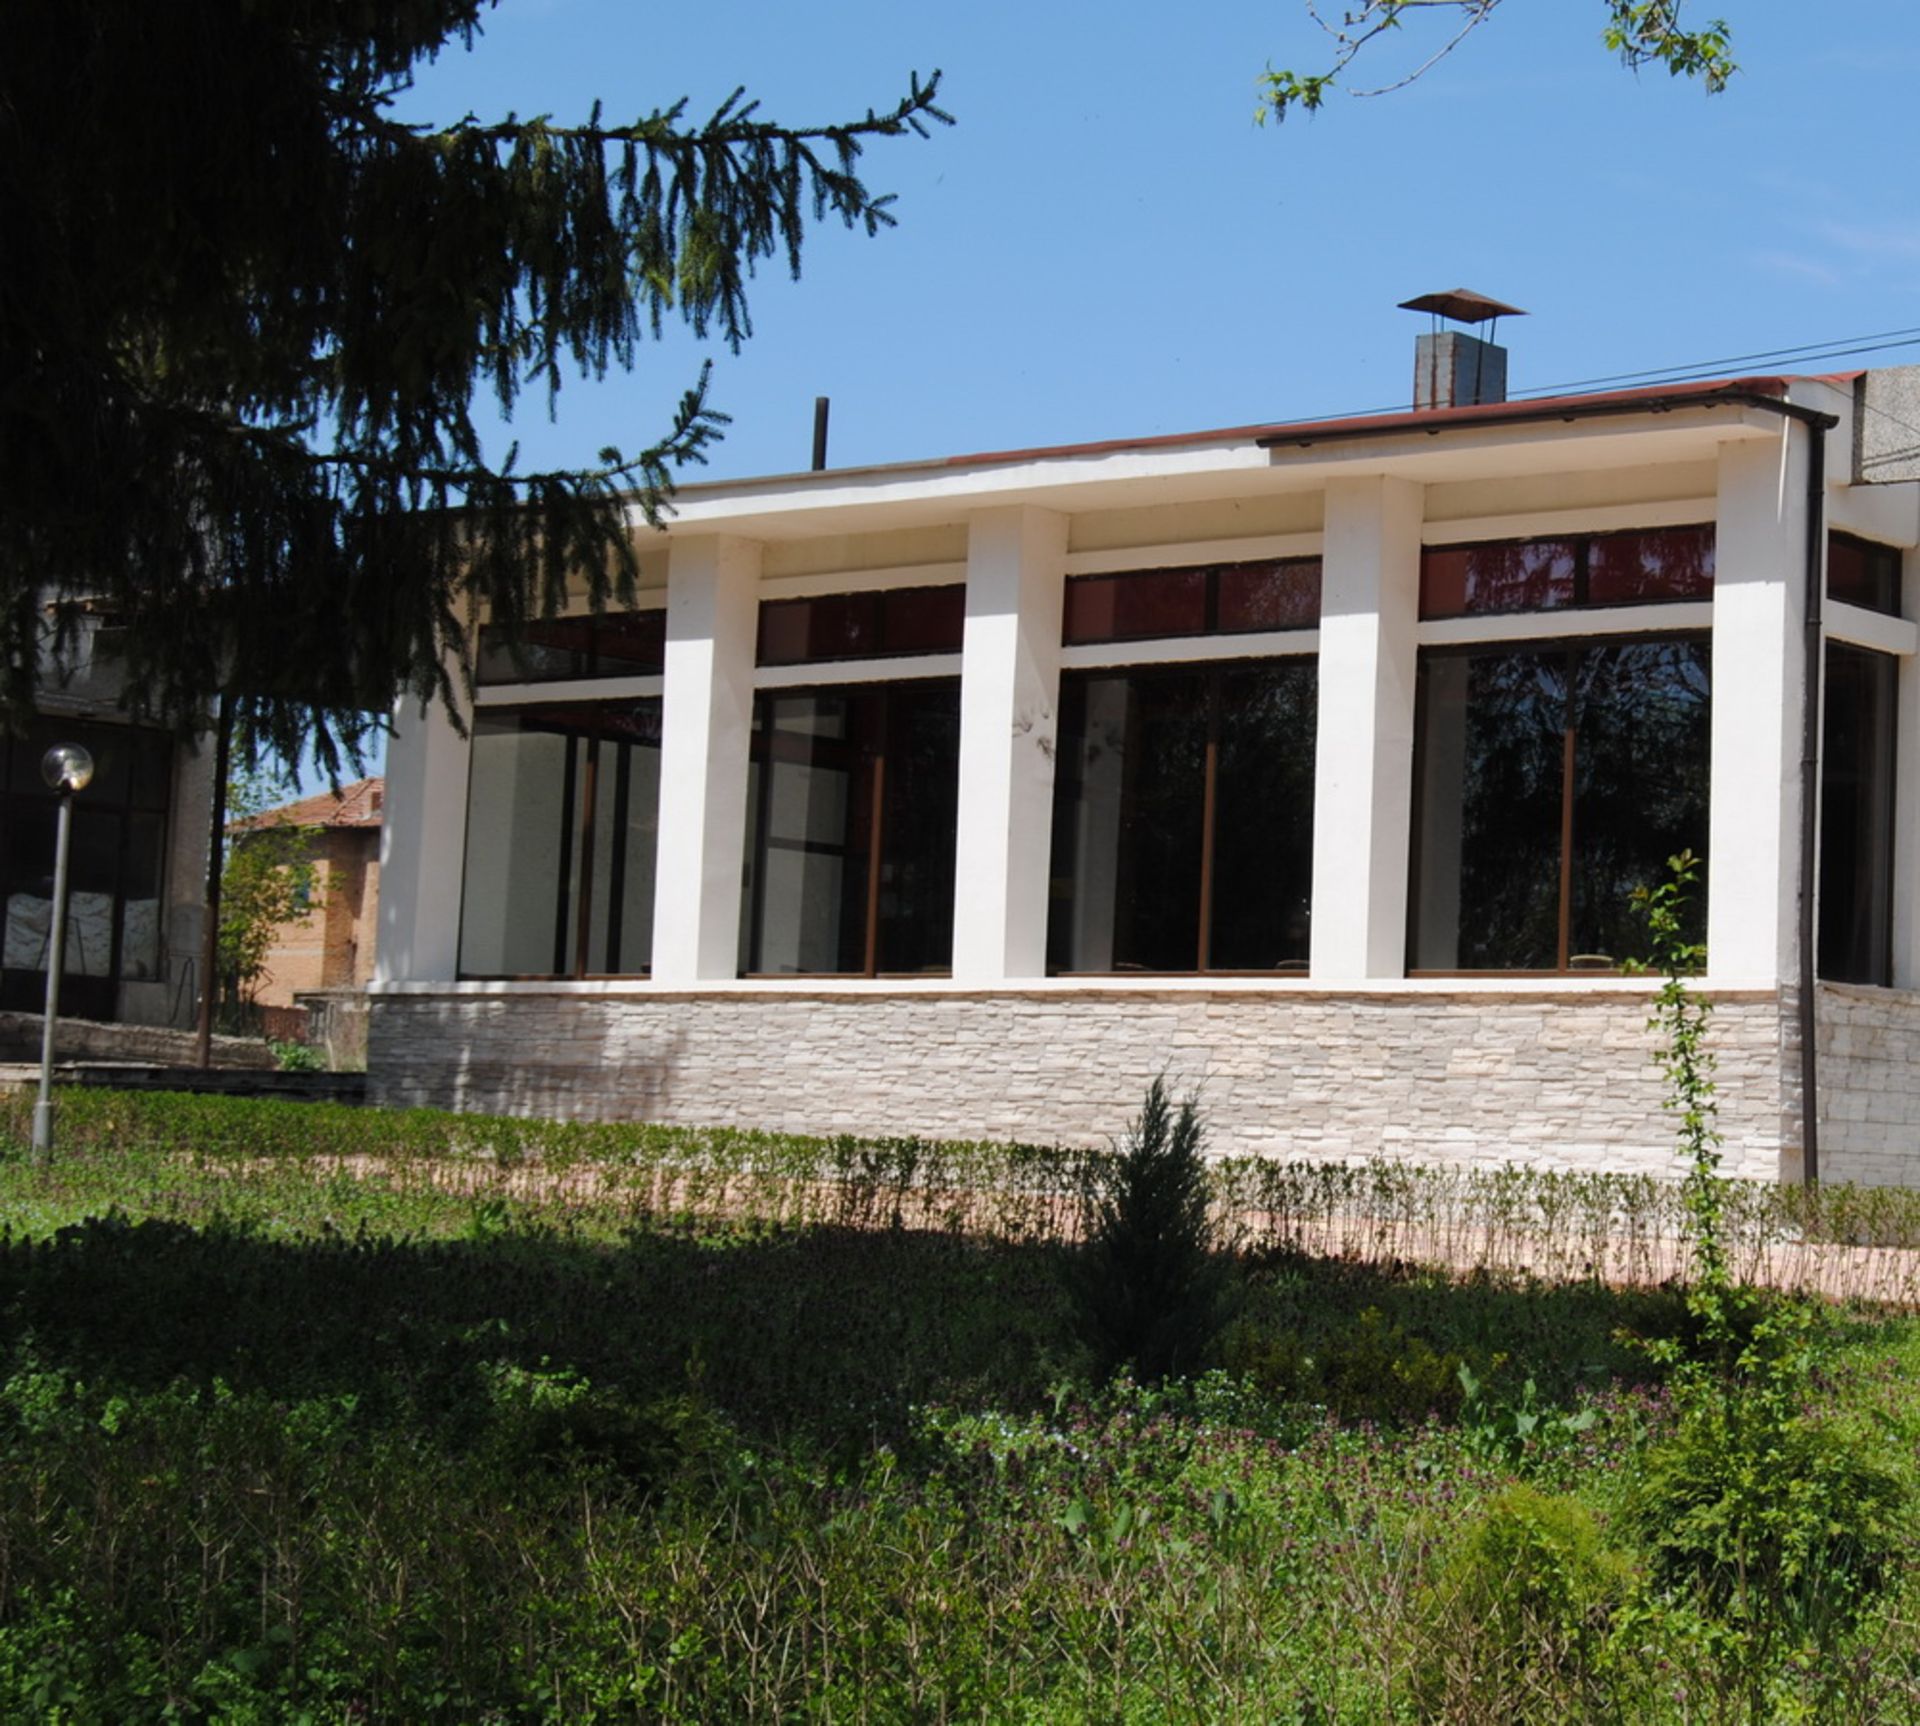 2,300 sqm Two Storey Property – 5 min from Pavlikeni, VT! - Image 23 of 25